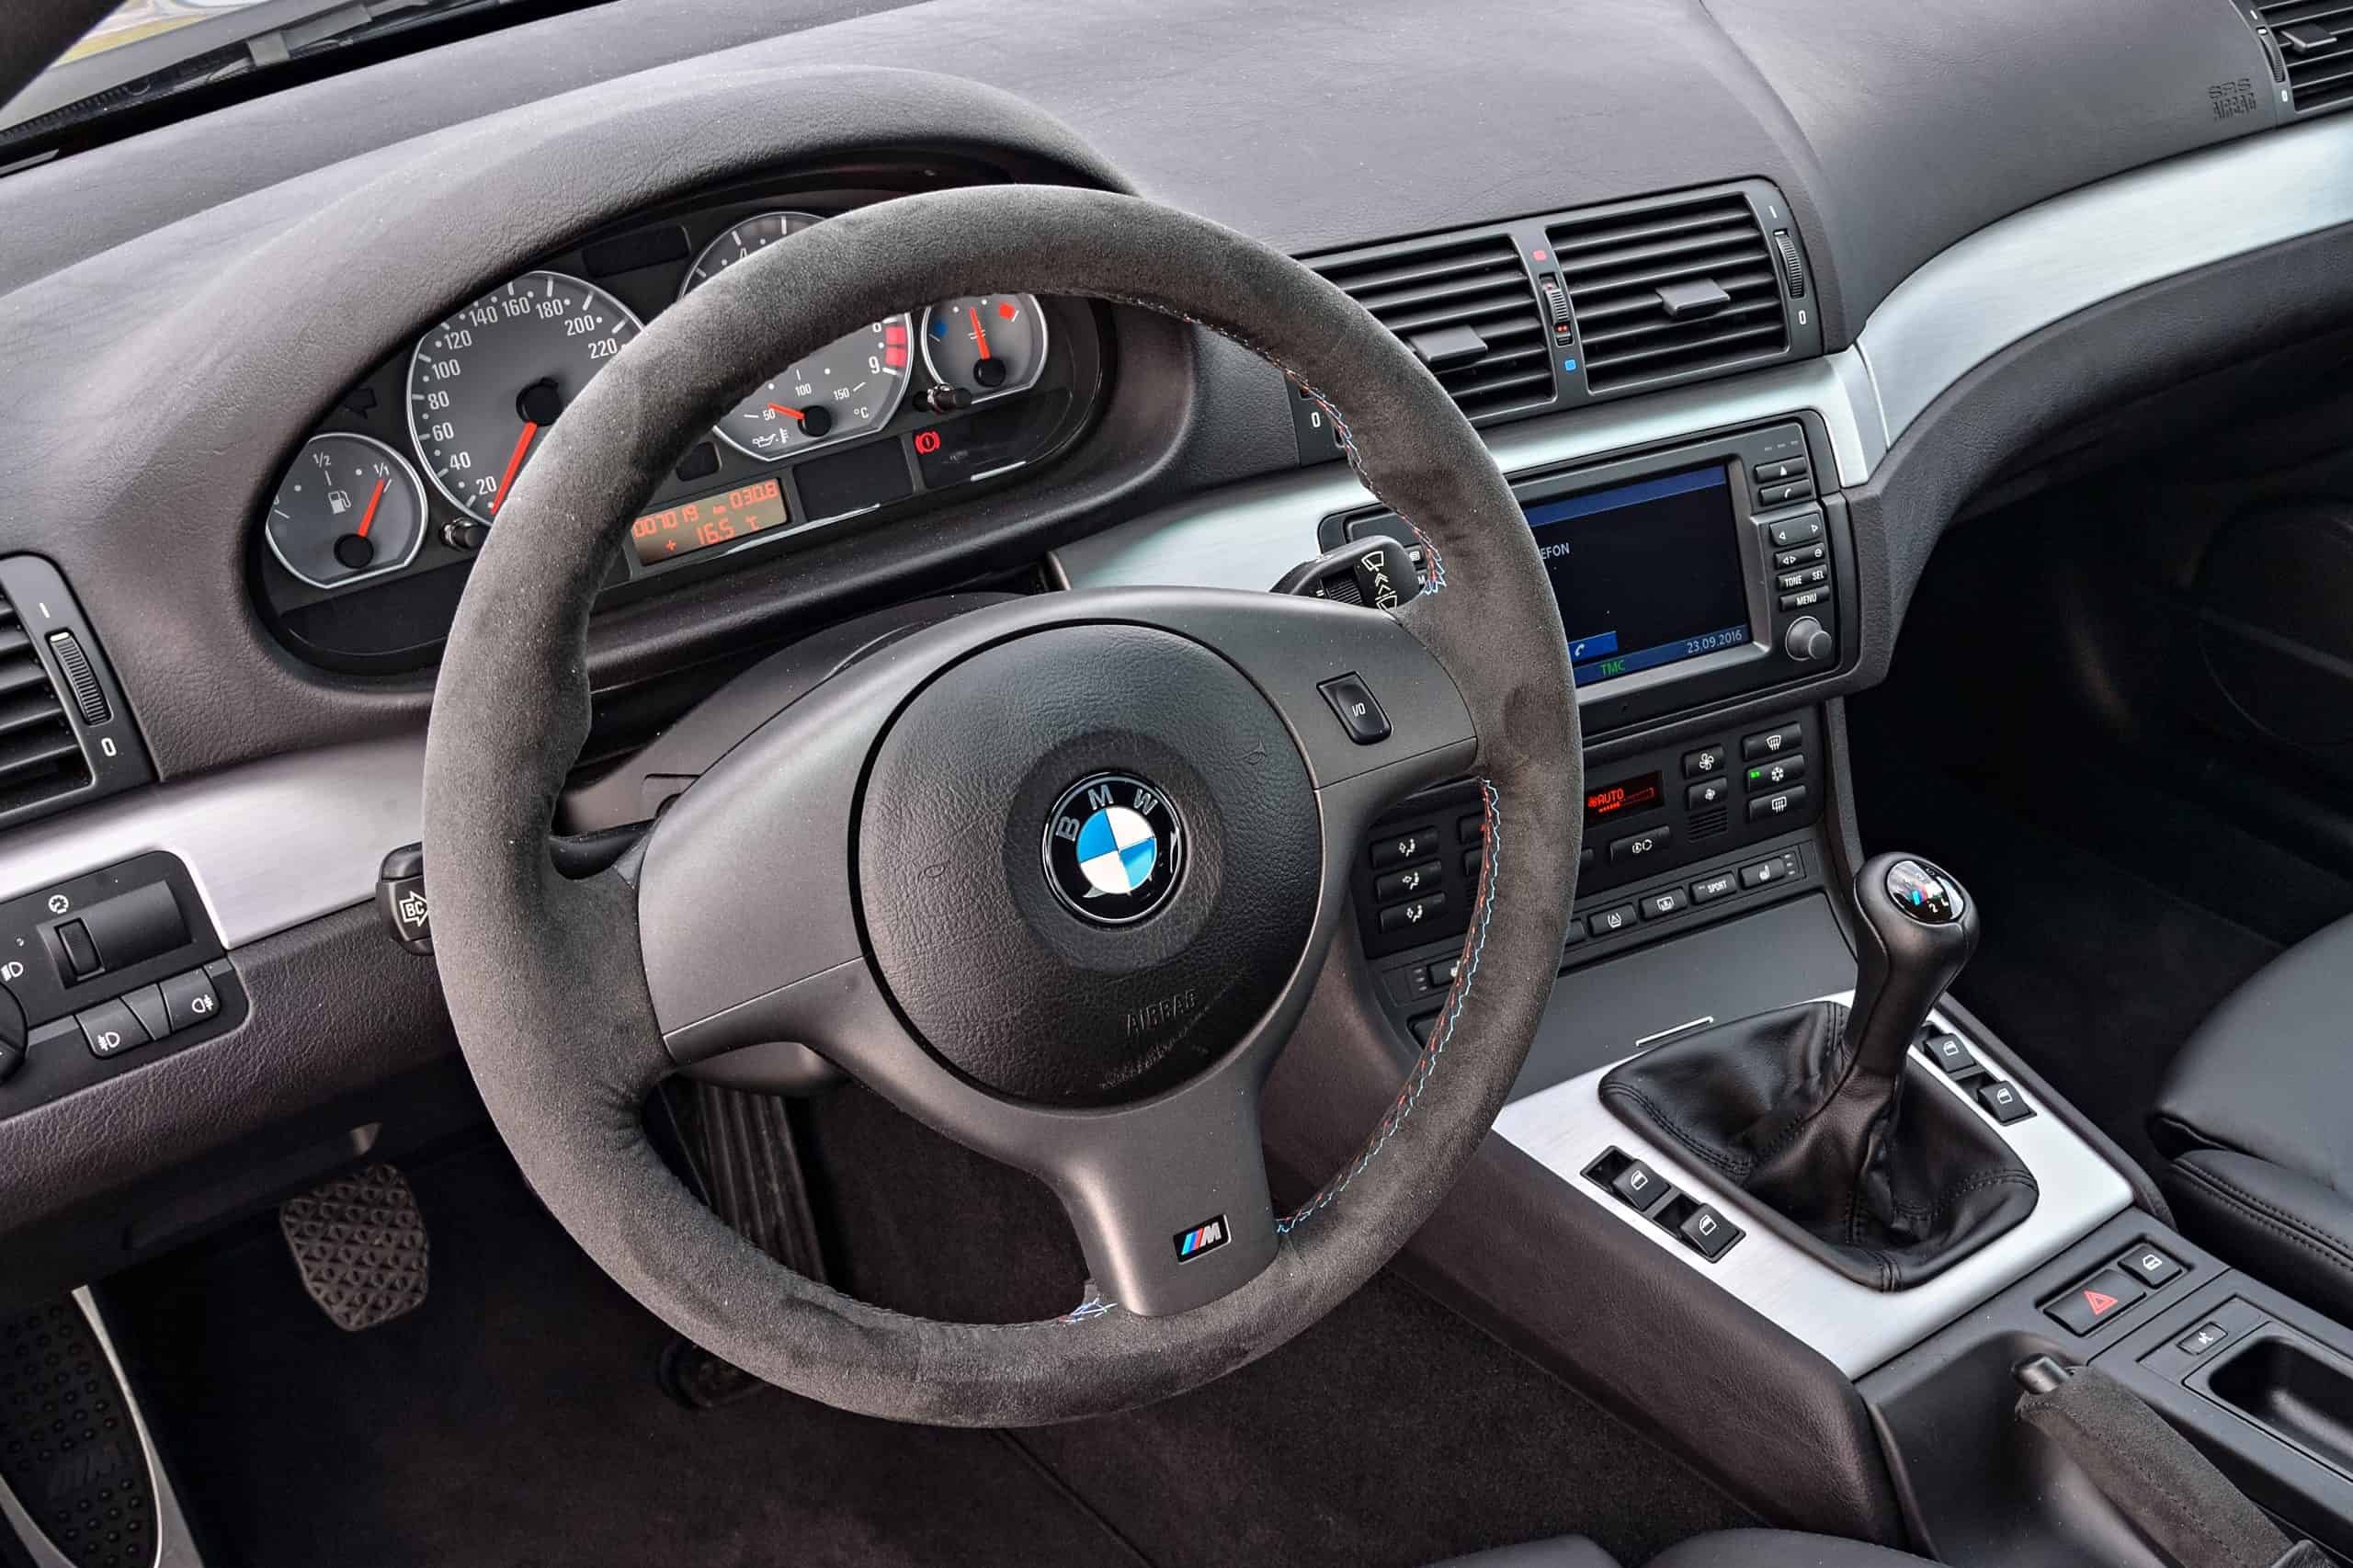 BMW E46 steering wheel specs options